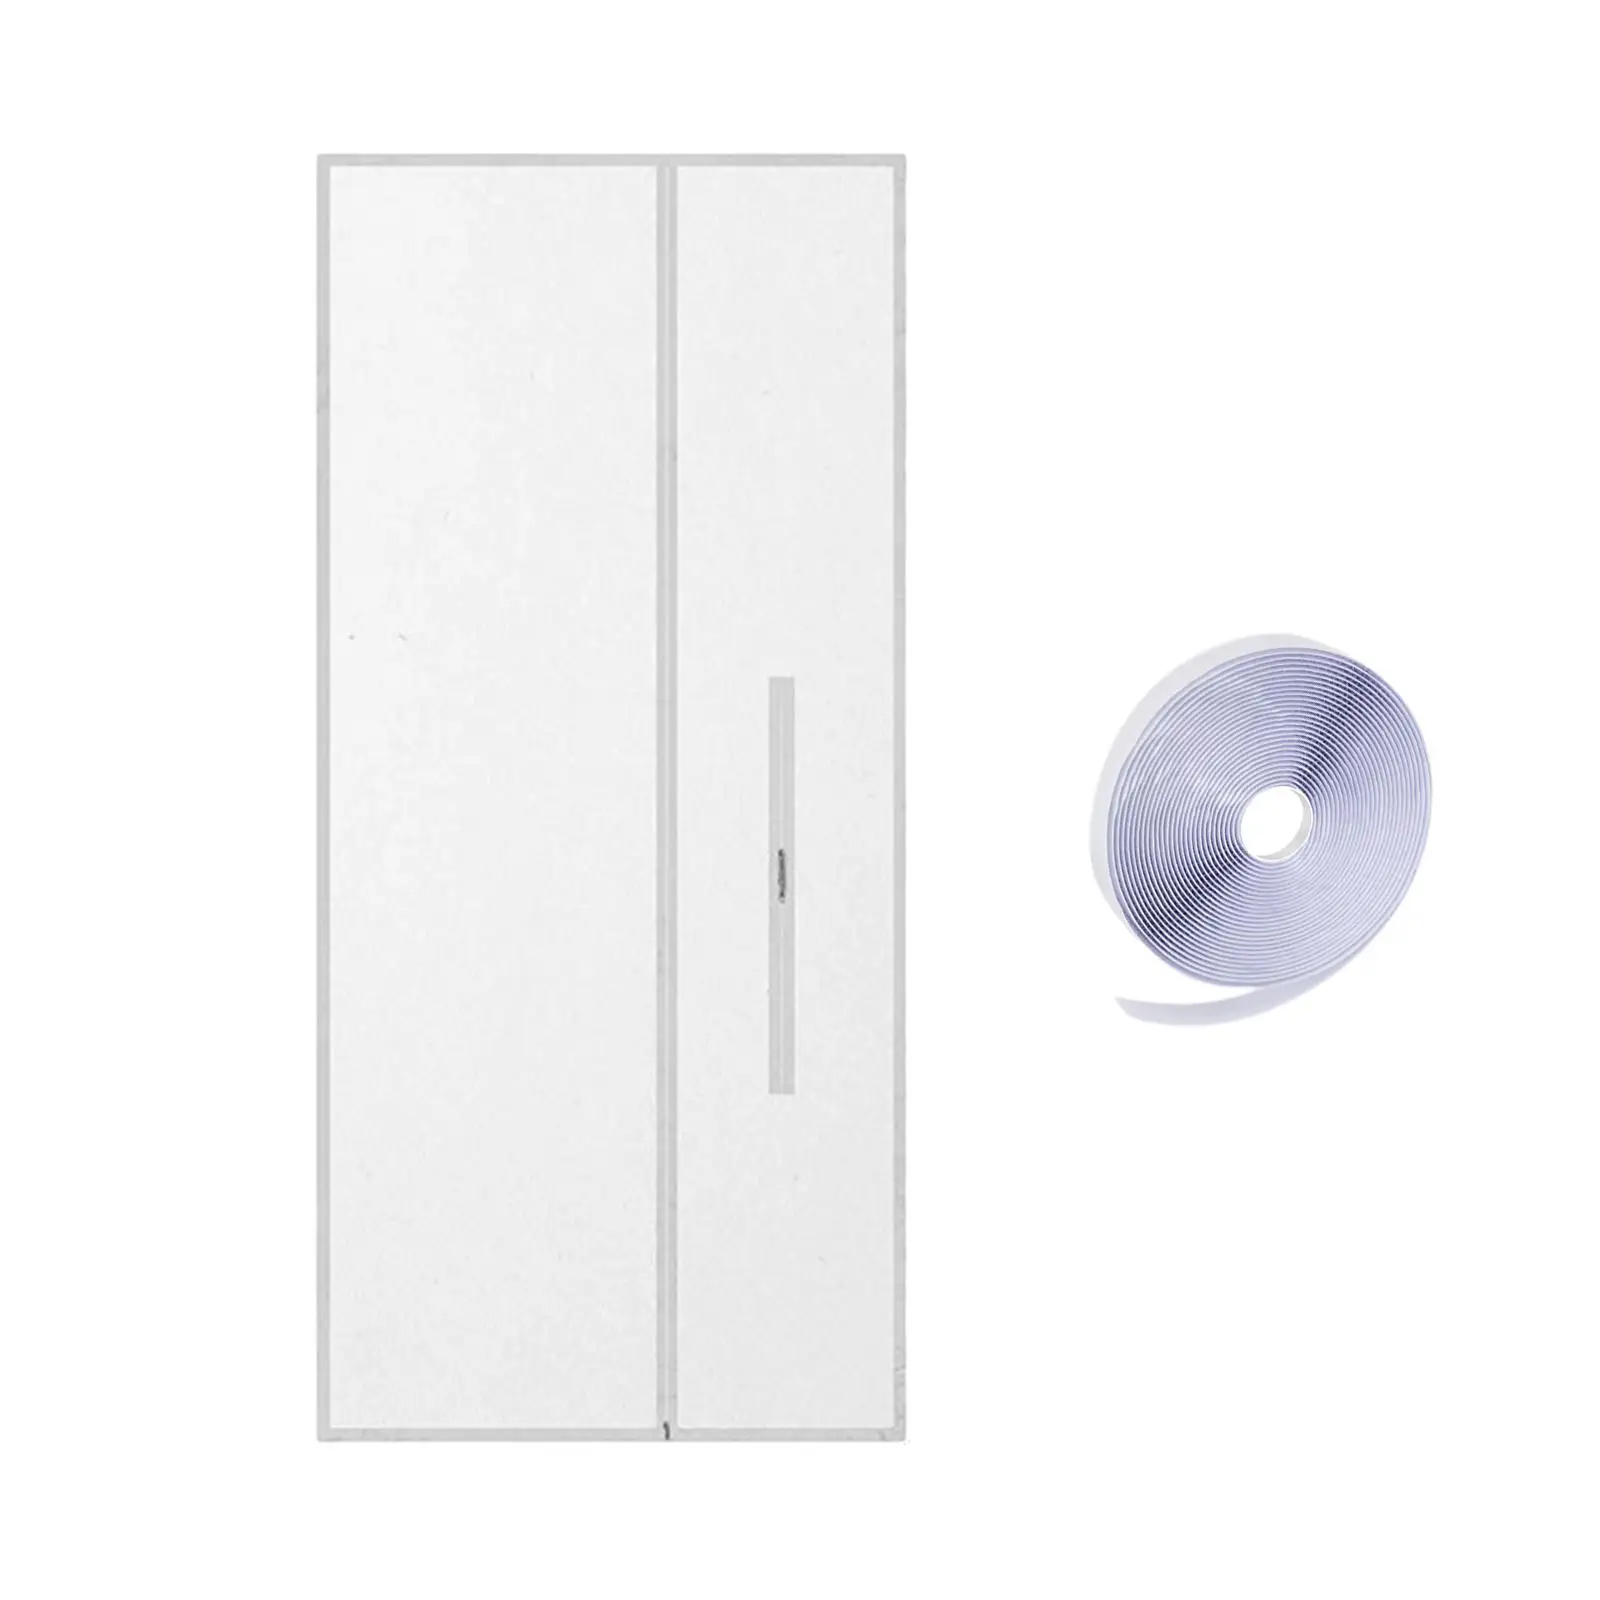 Zipper Screen Door Seal for Portable Air Conditioner Air EXCHANGE Guards